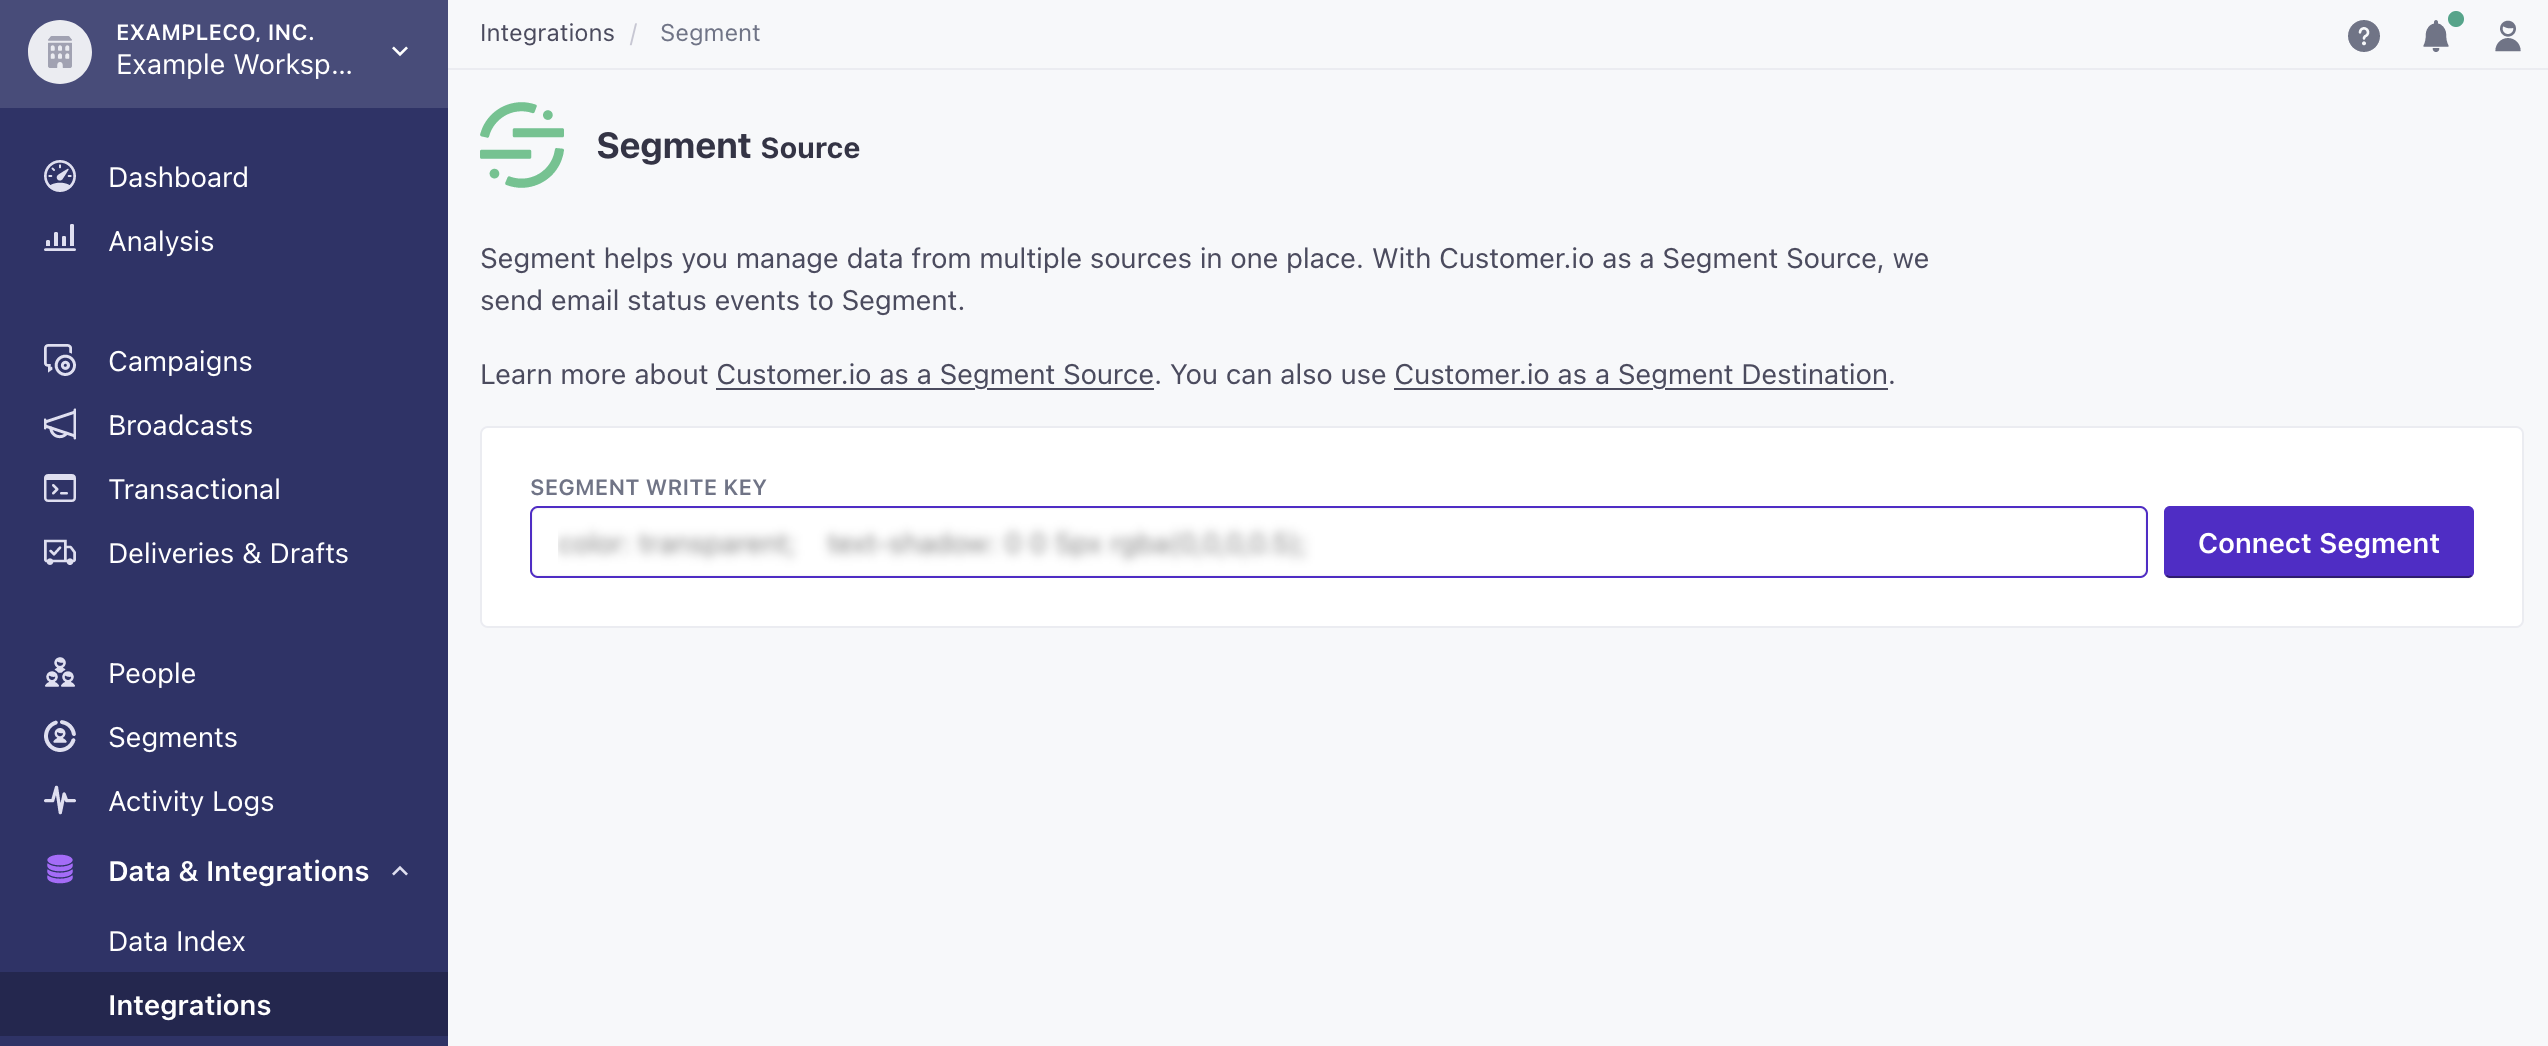 Screenshot of the Segment Source settings page in Customer.io.